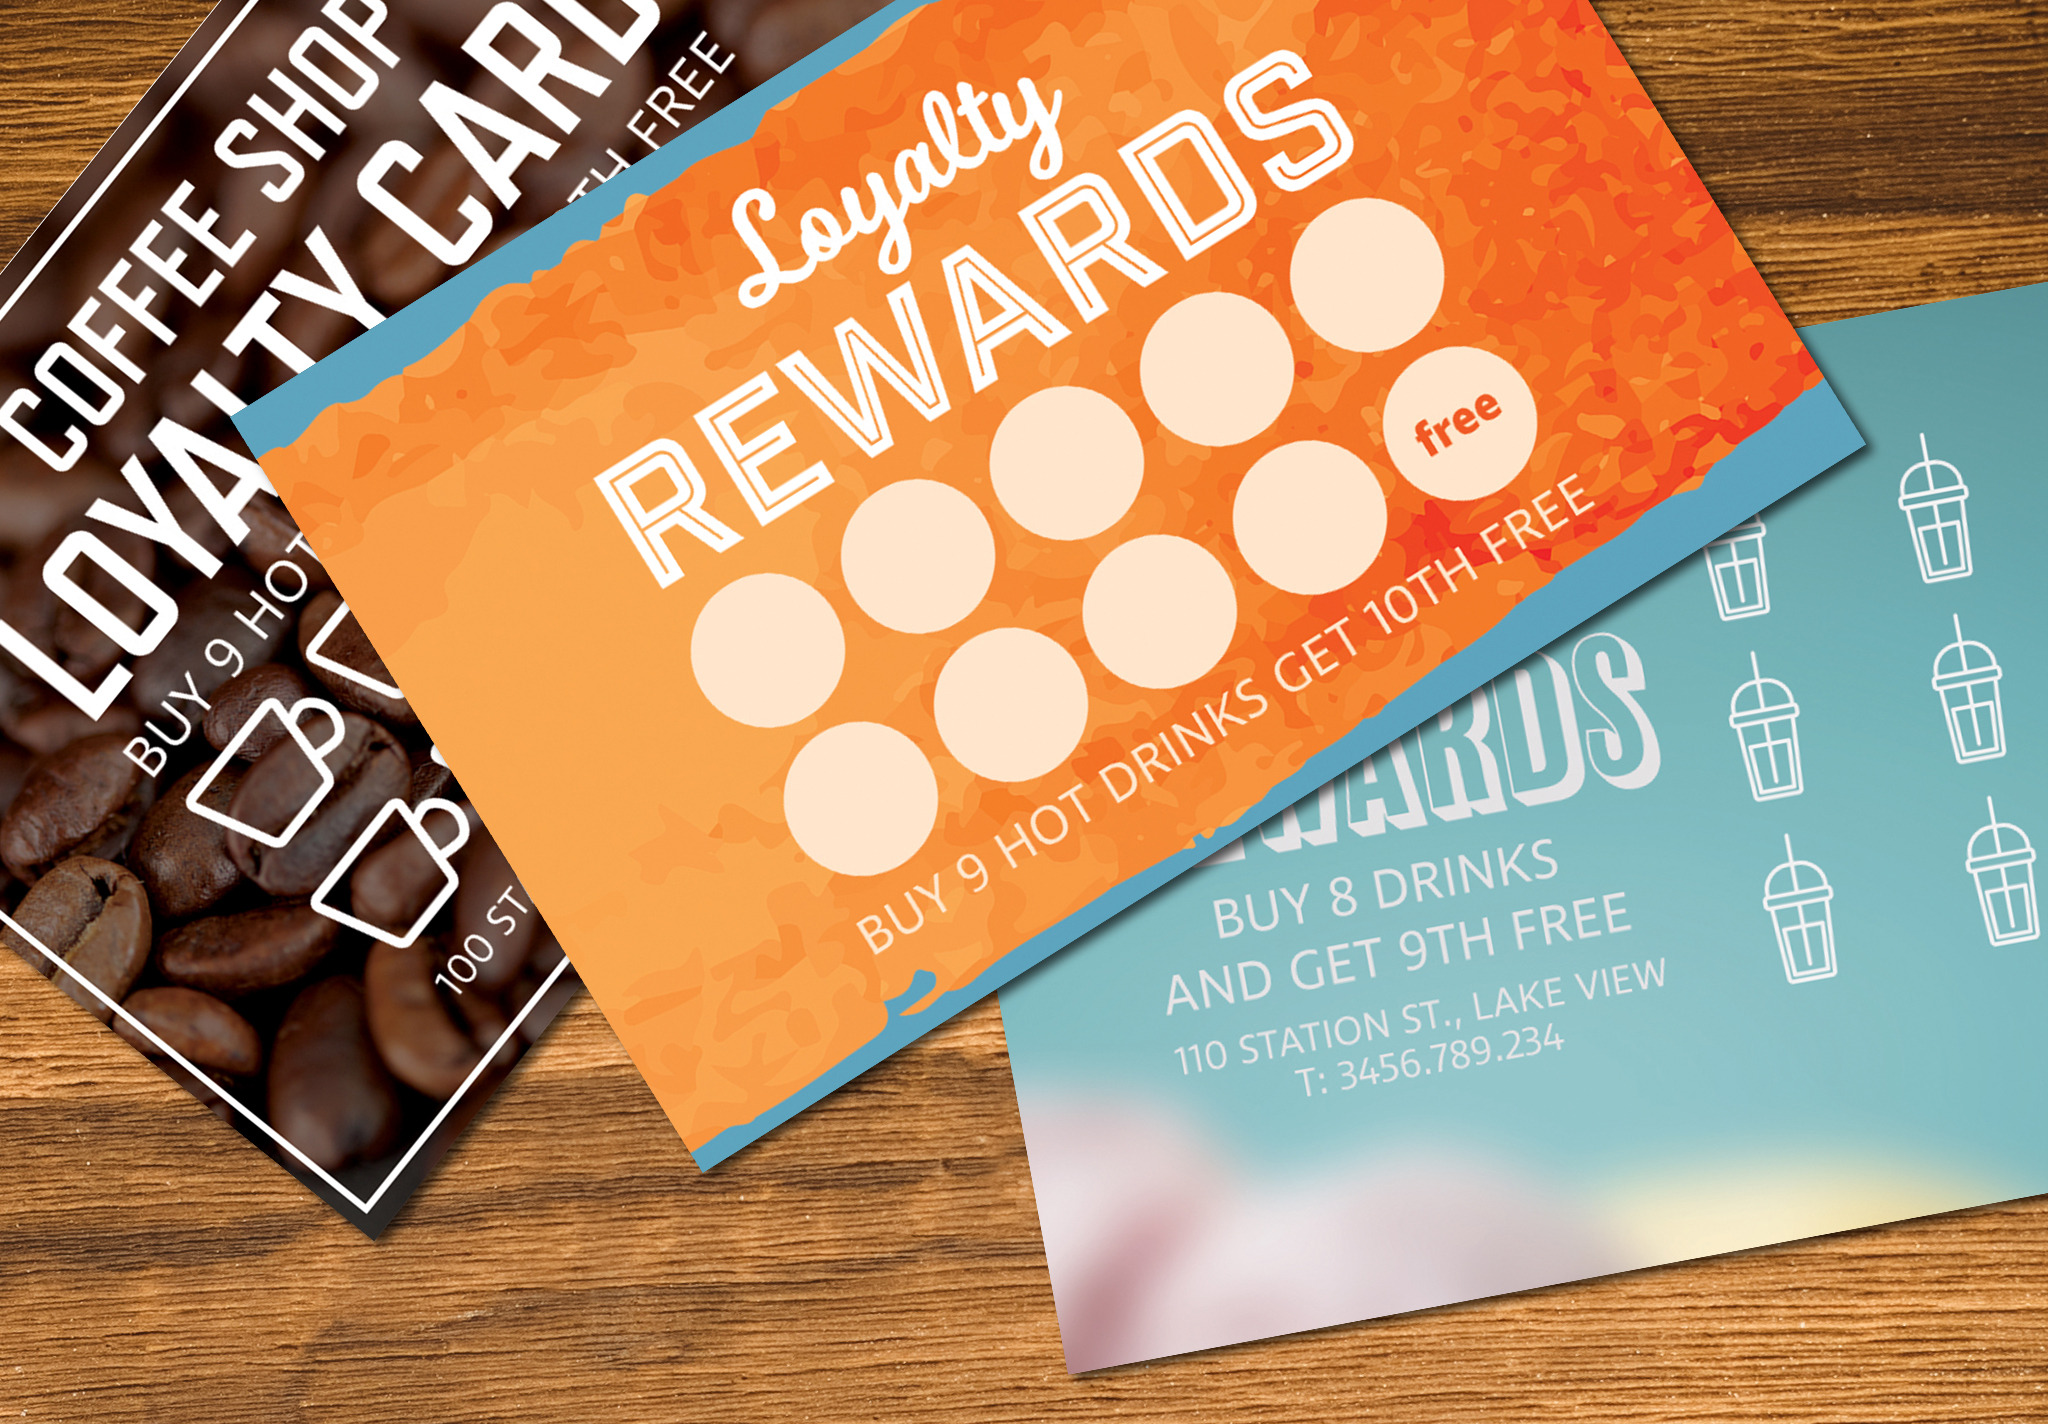 Loyalty Card Templates Mockup ~ Templates ~ Creative Market